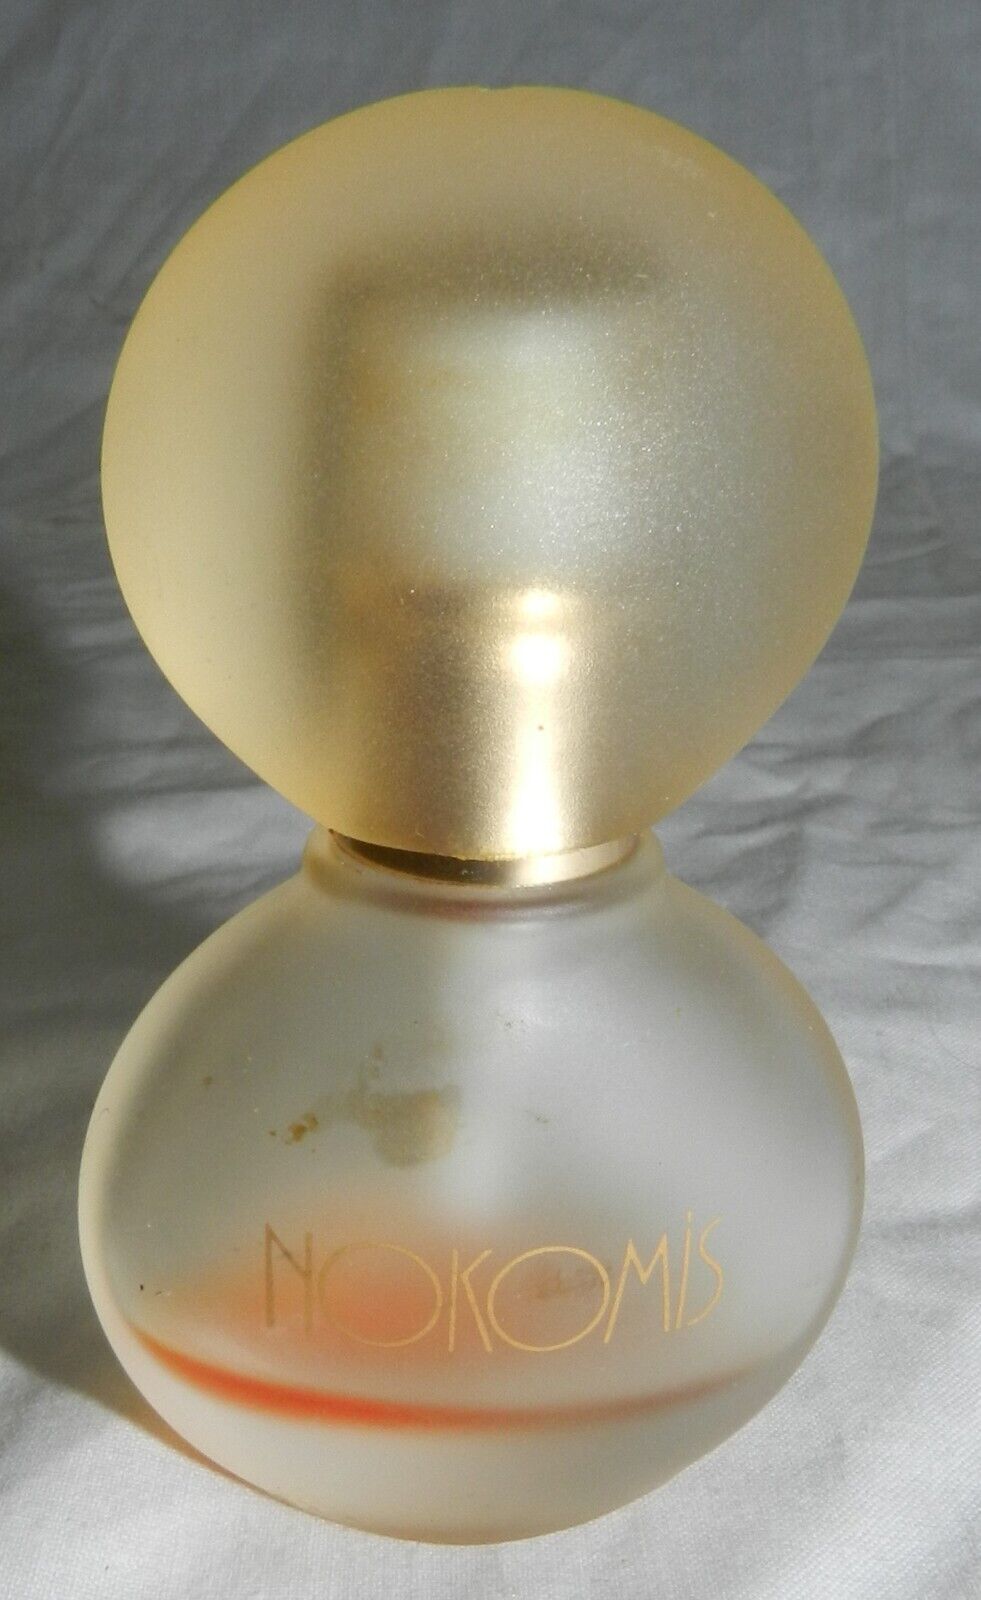 Nokomis by Coty Spray Perfume Bottle - 0.25 Fl. Oz. mostly empty